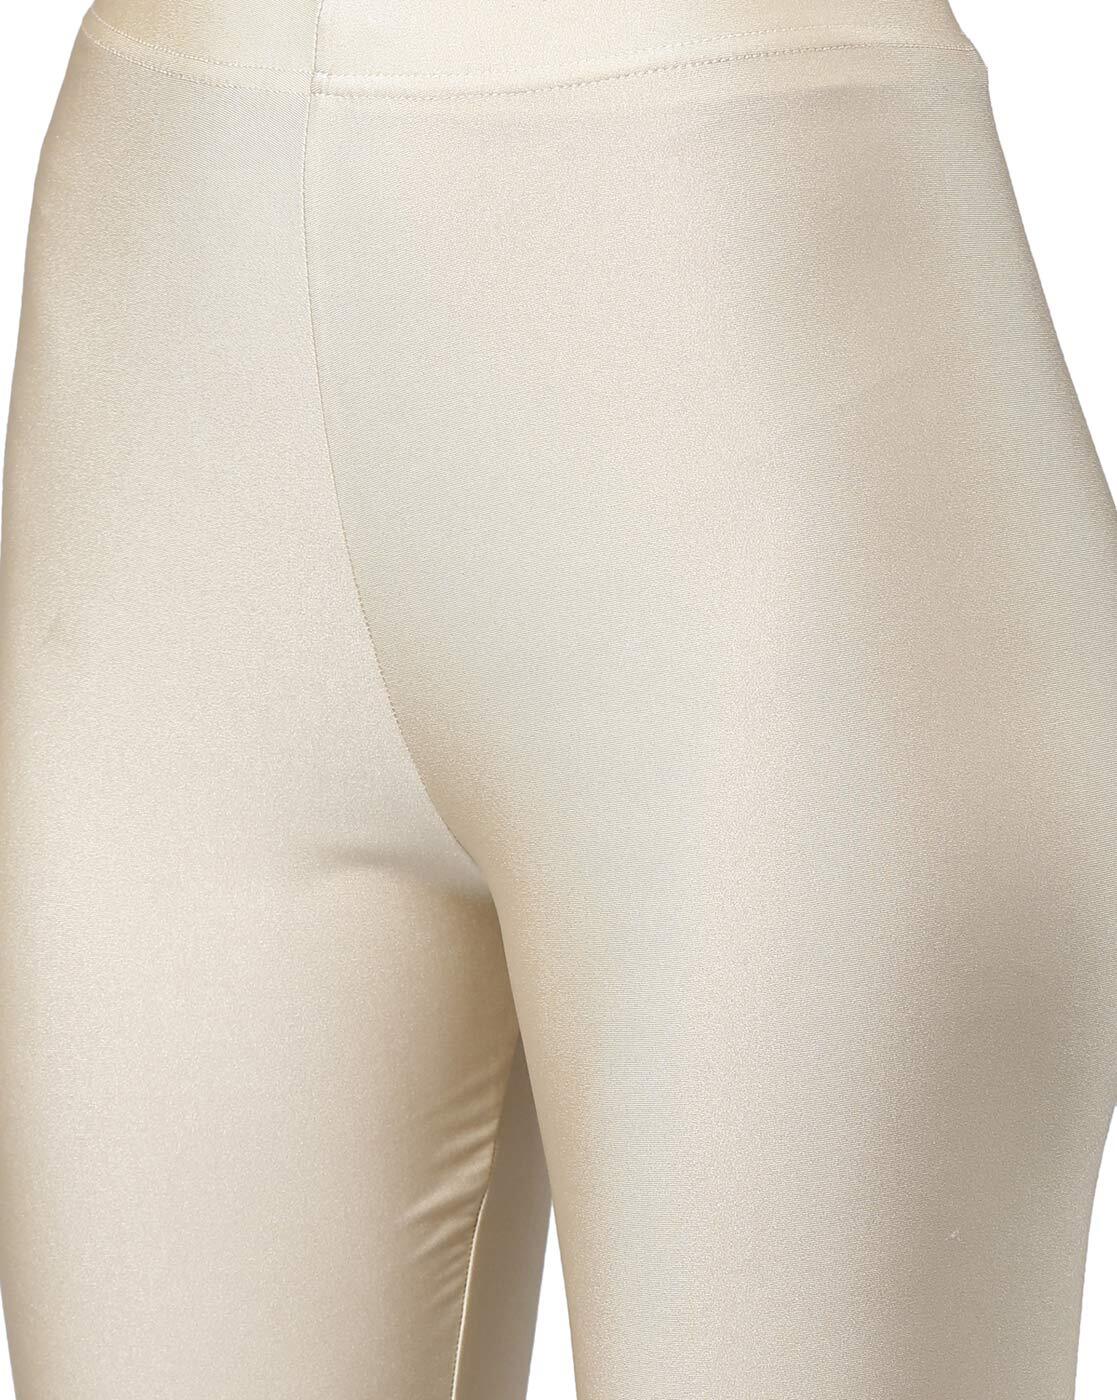 Buy TNQ Women's Shimmer Legging (Golden, PLUS SIZE, XXL) at Amazon.in